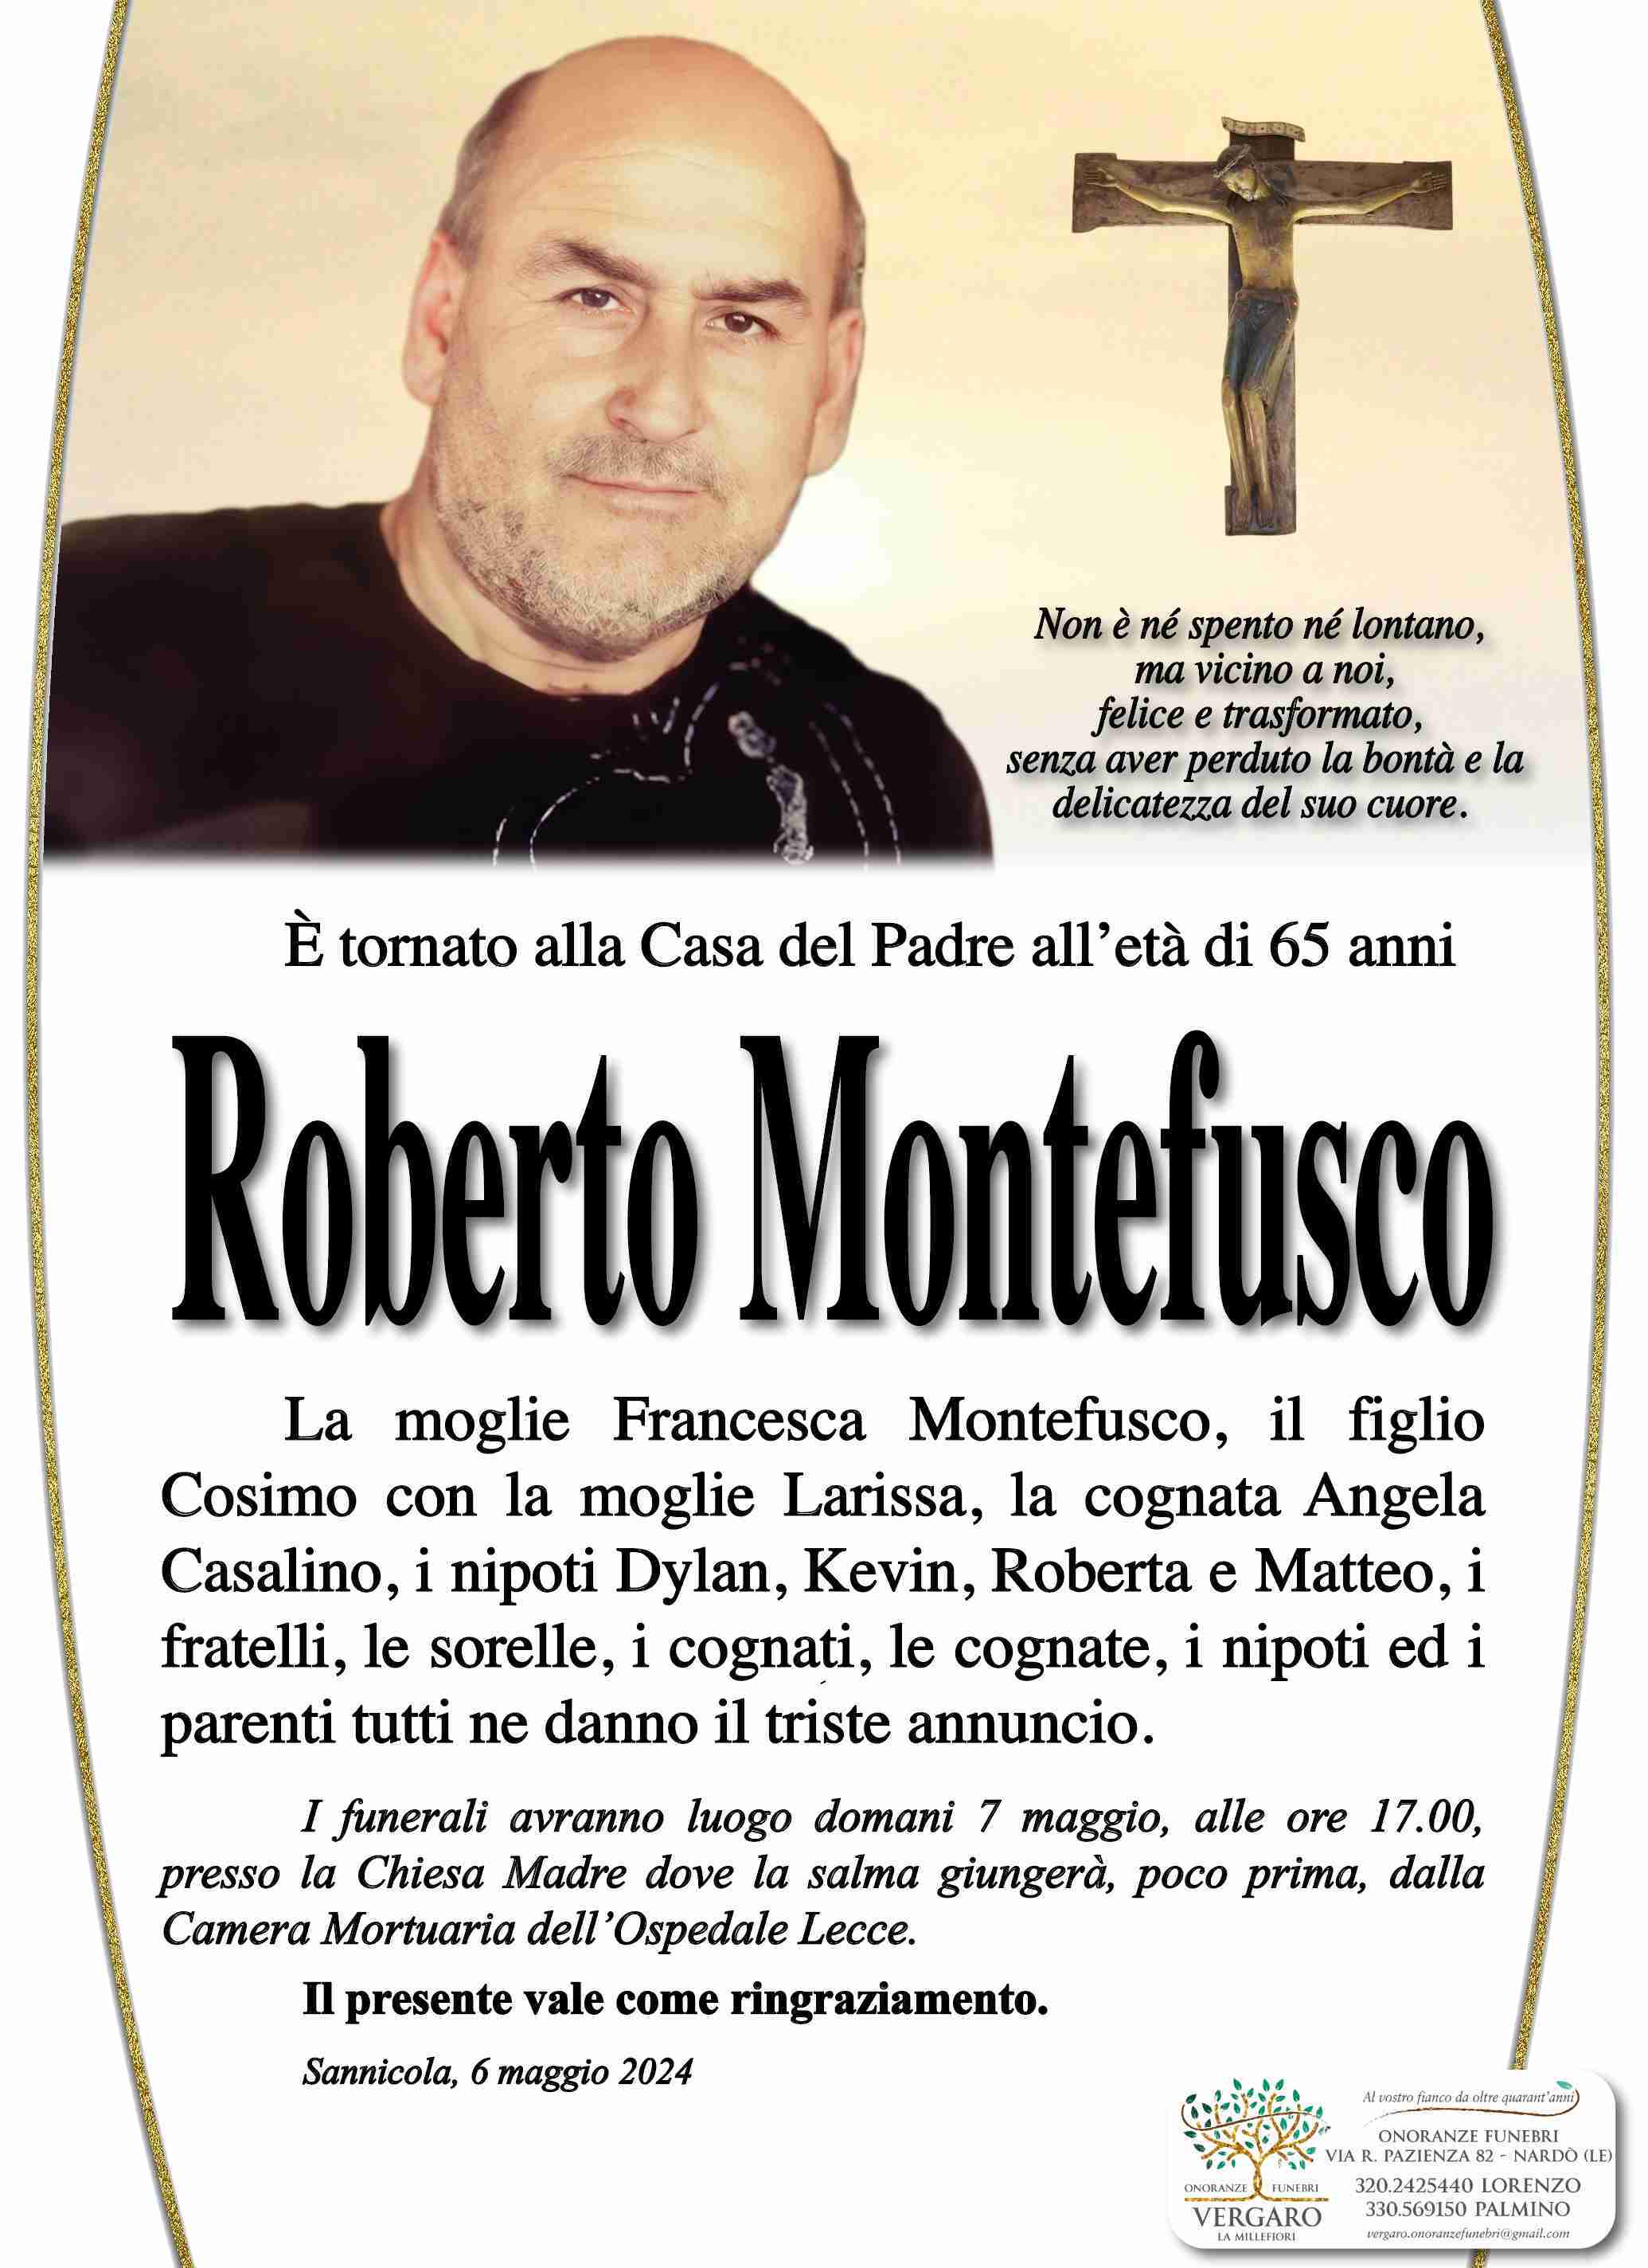 Roberto Montefusco